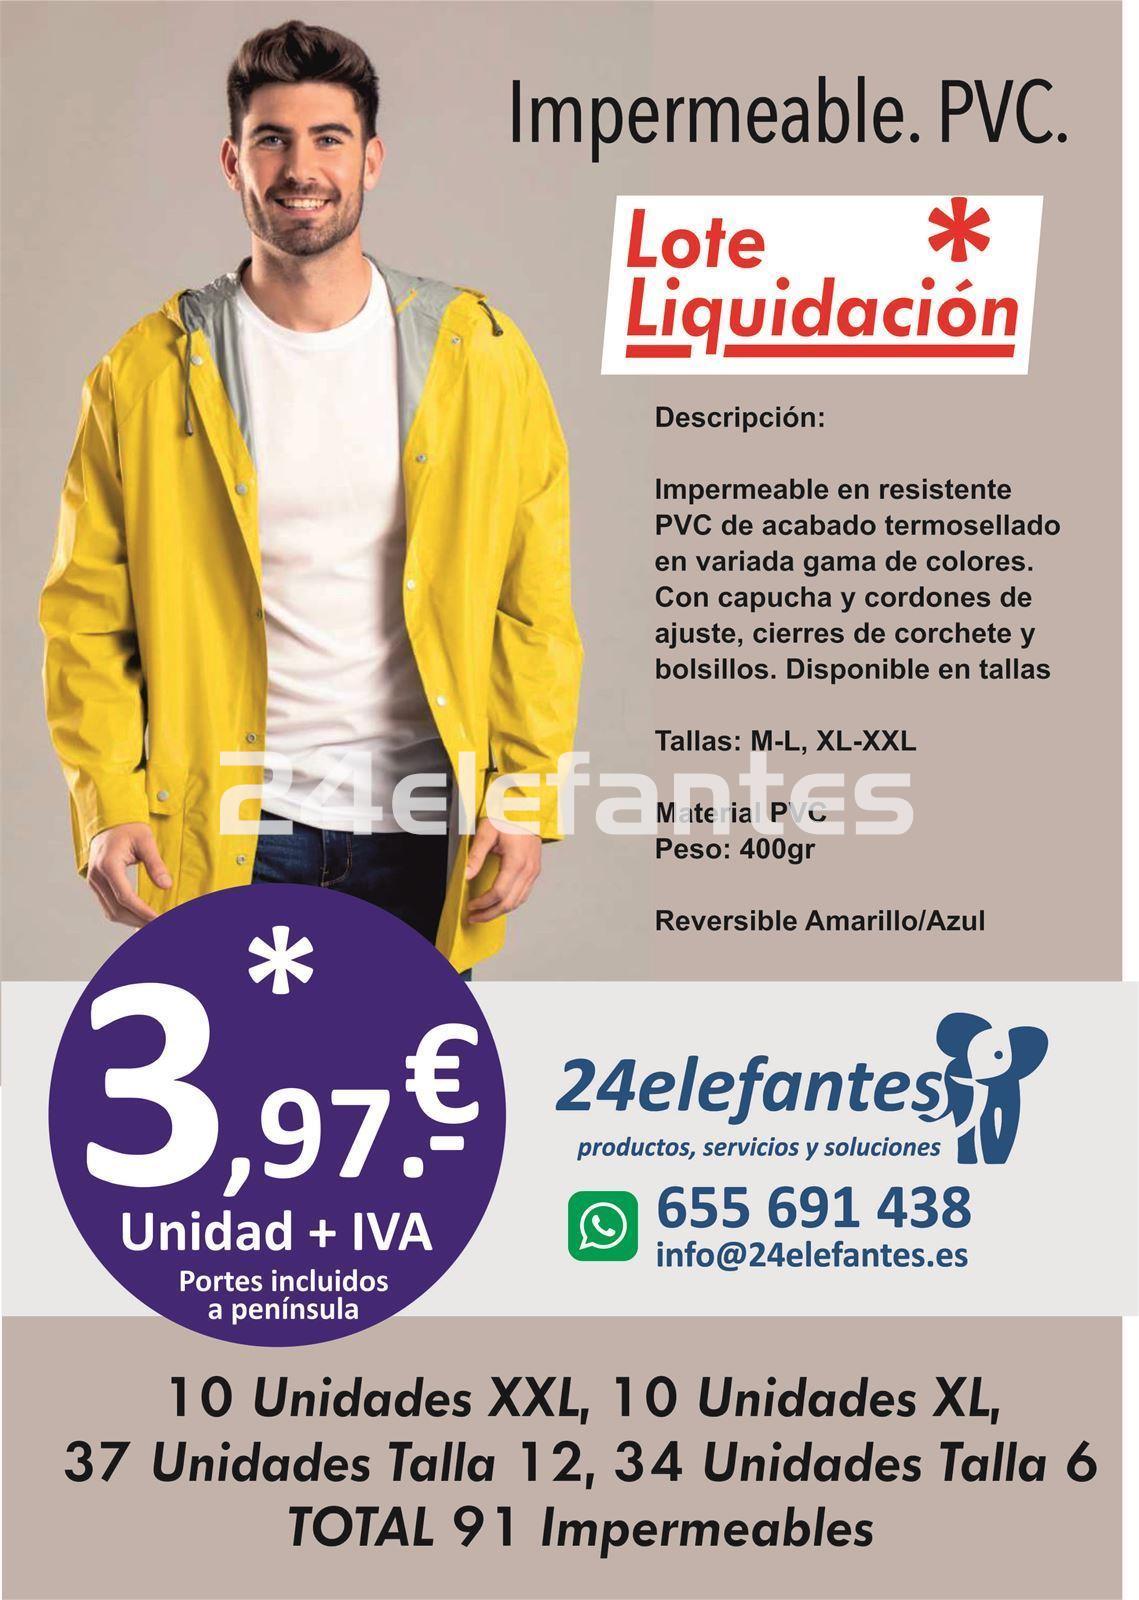 Impermeable PVC, Liquidación Lote - Imagen 1